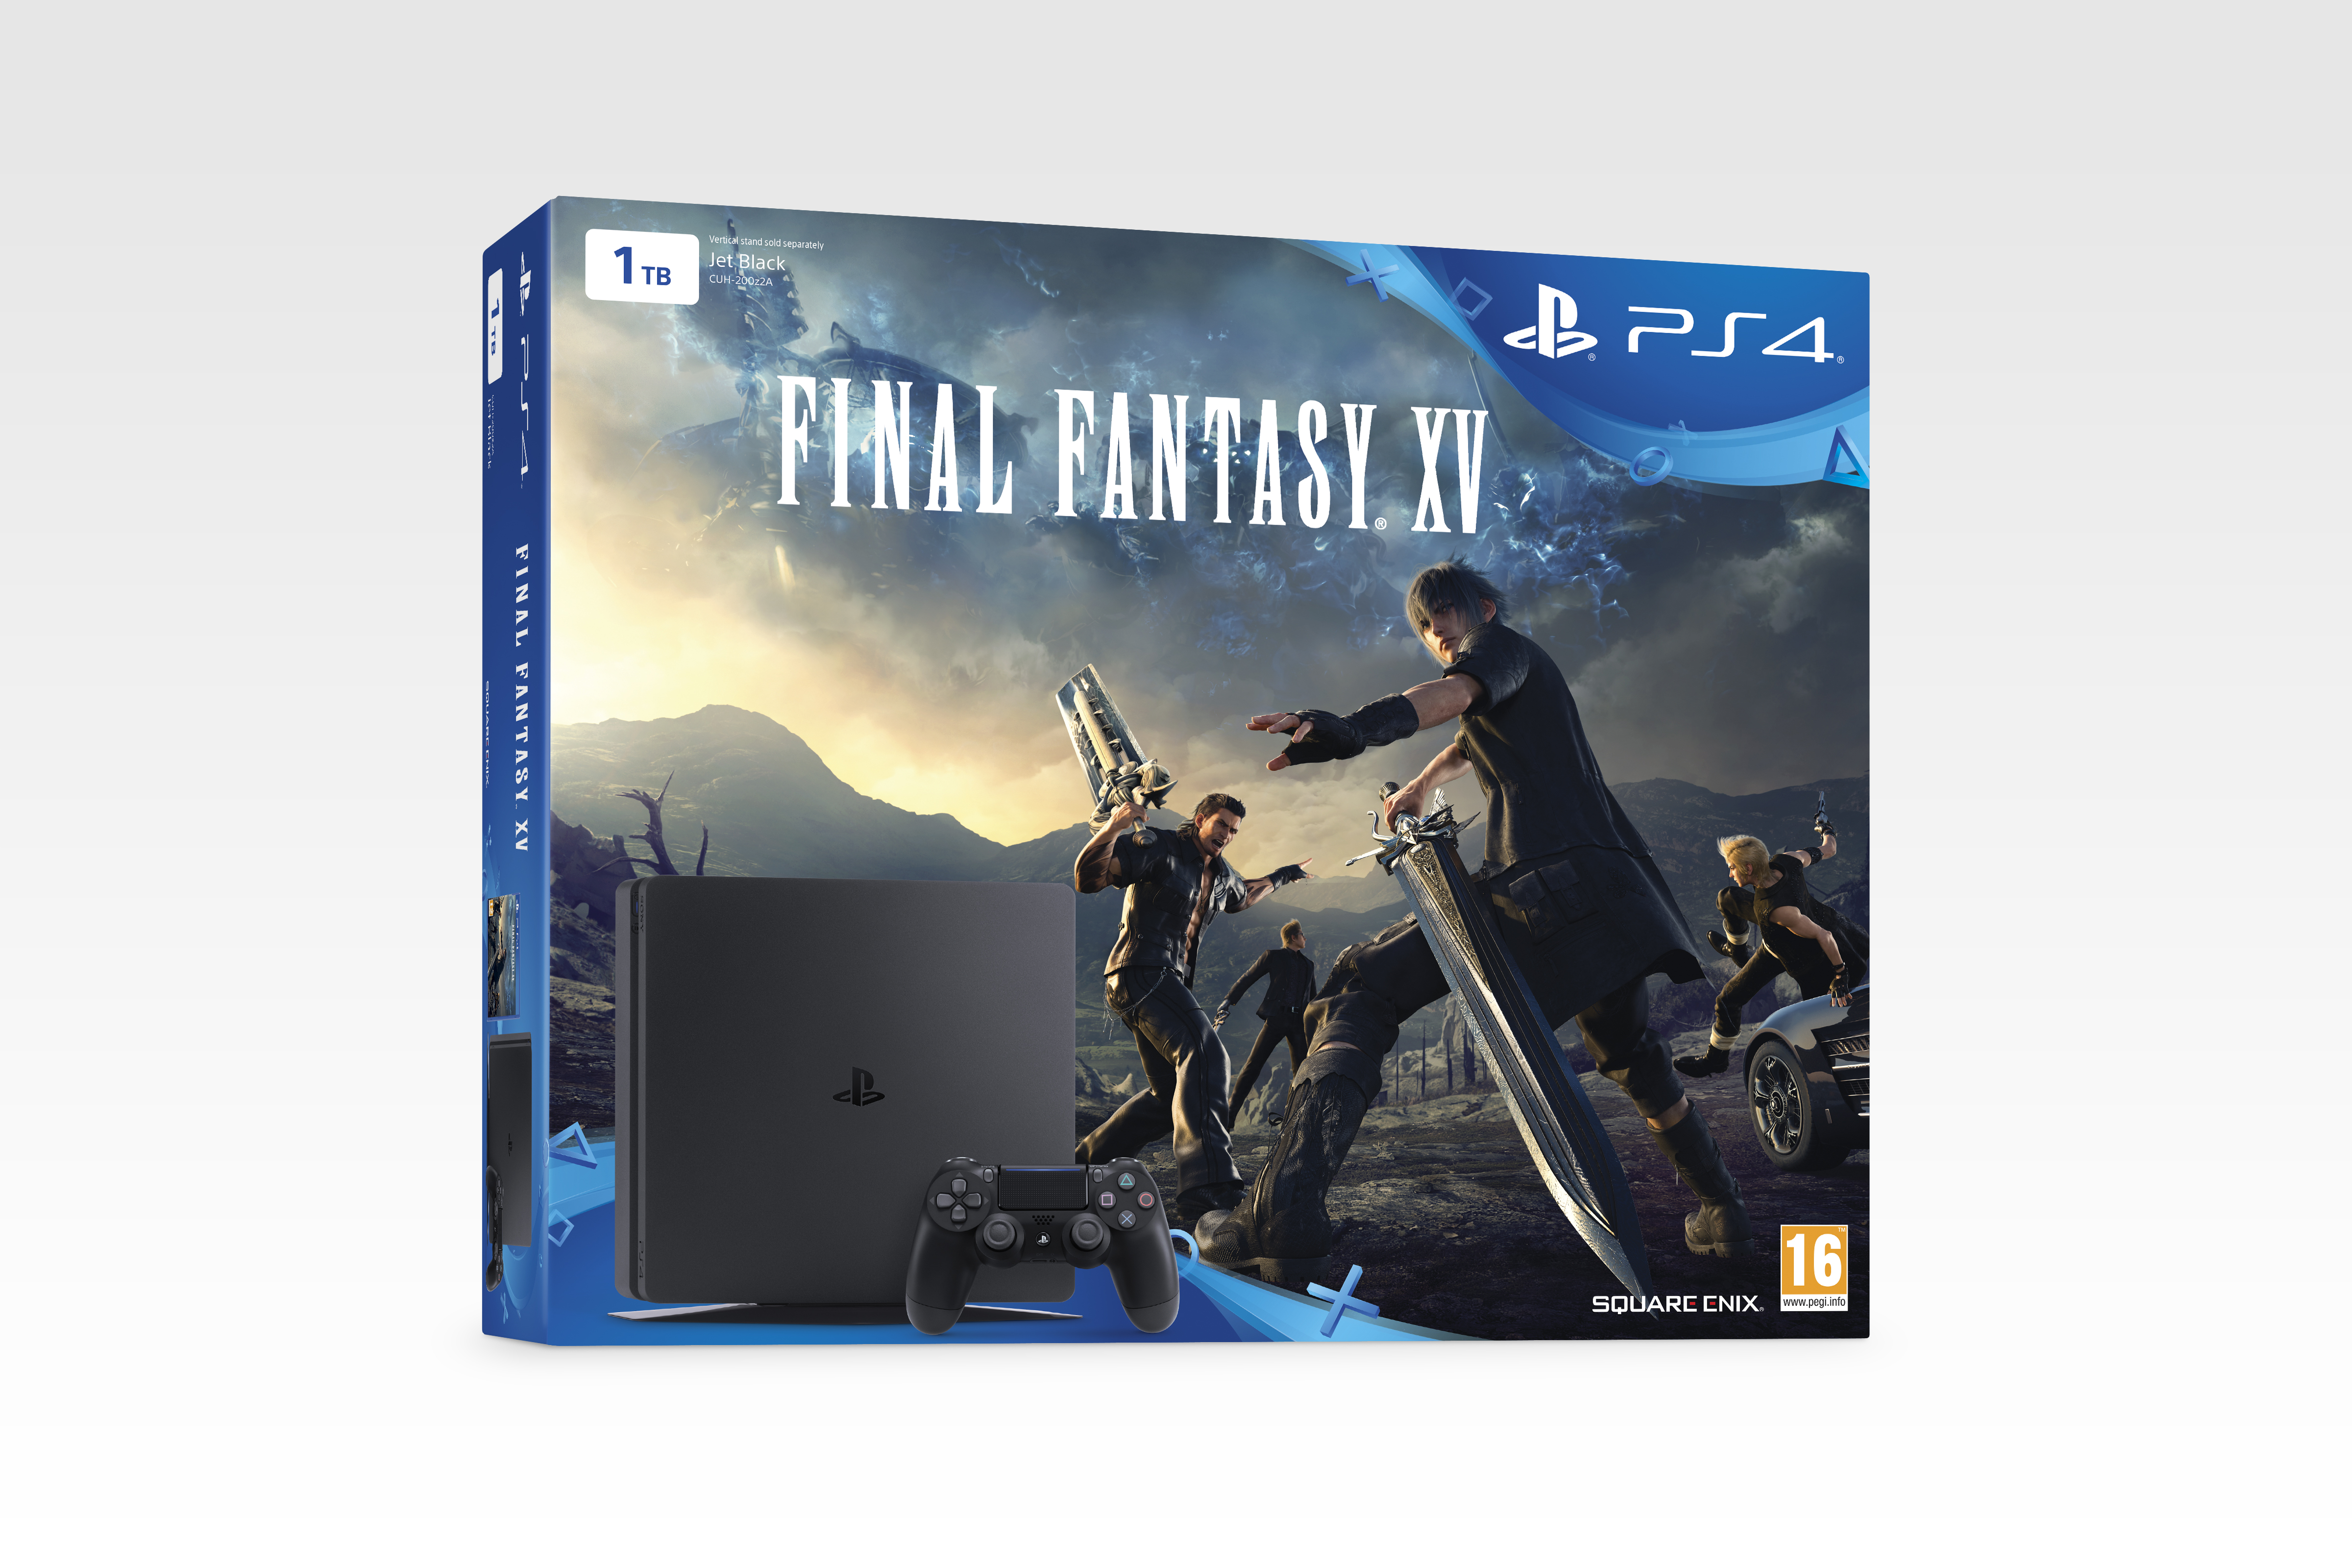 PS4 Final Fantasy XV Luna Edition model announced for Japan - Gematsu